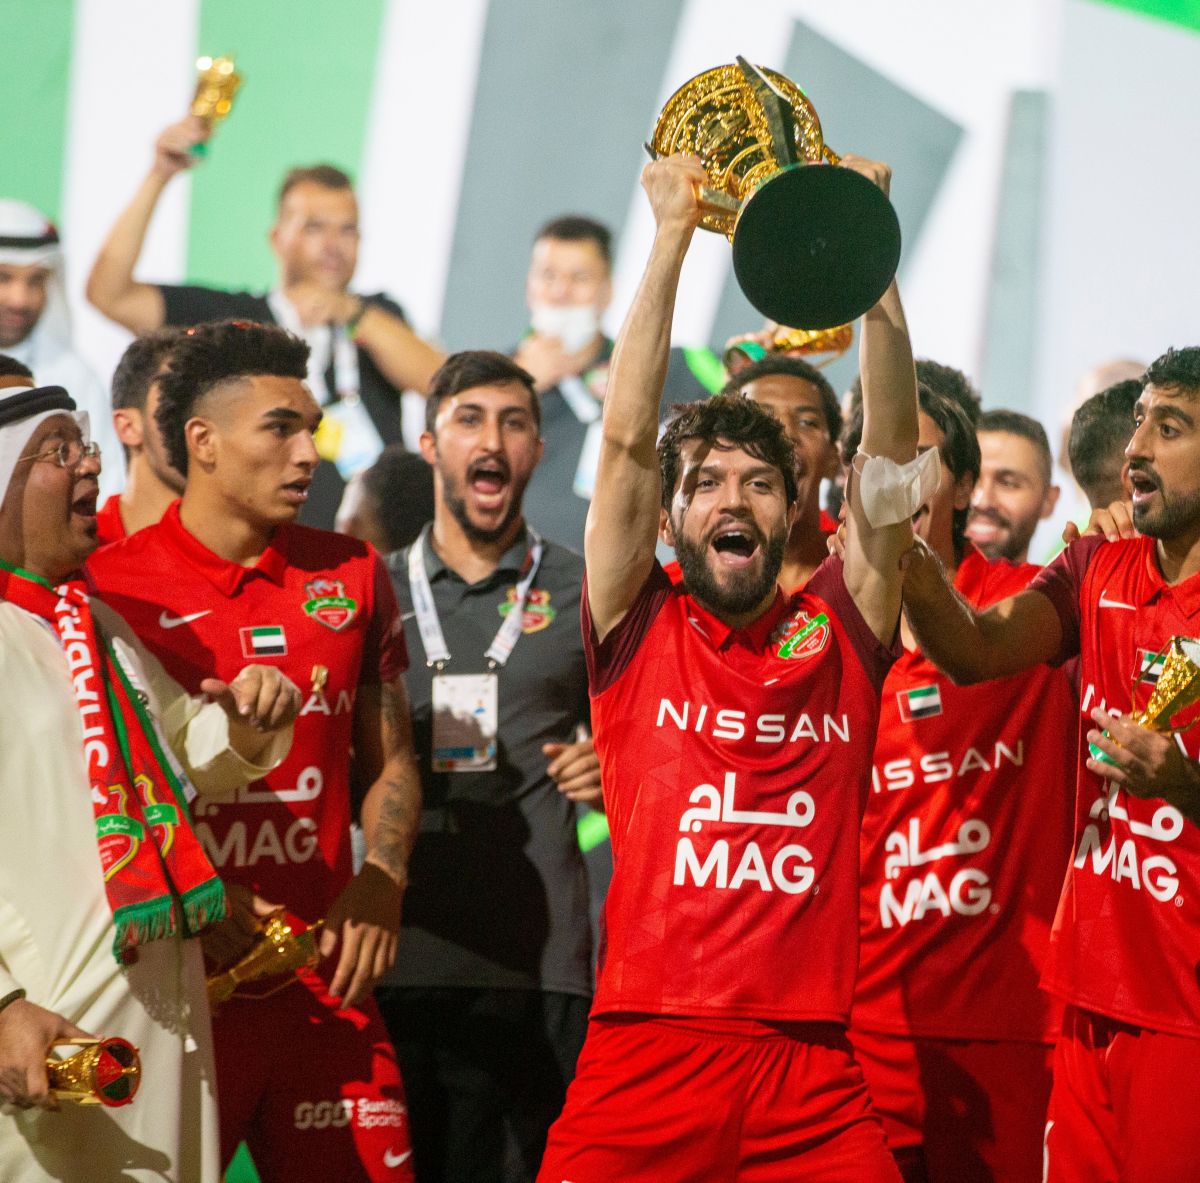 Машарипов держит Кубок Президента ОАЭ/ Olamsport